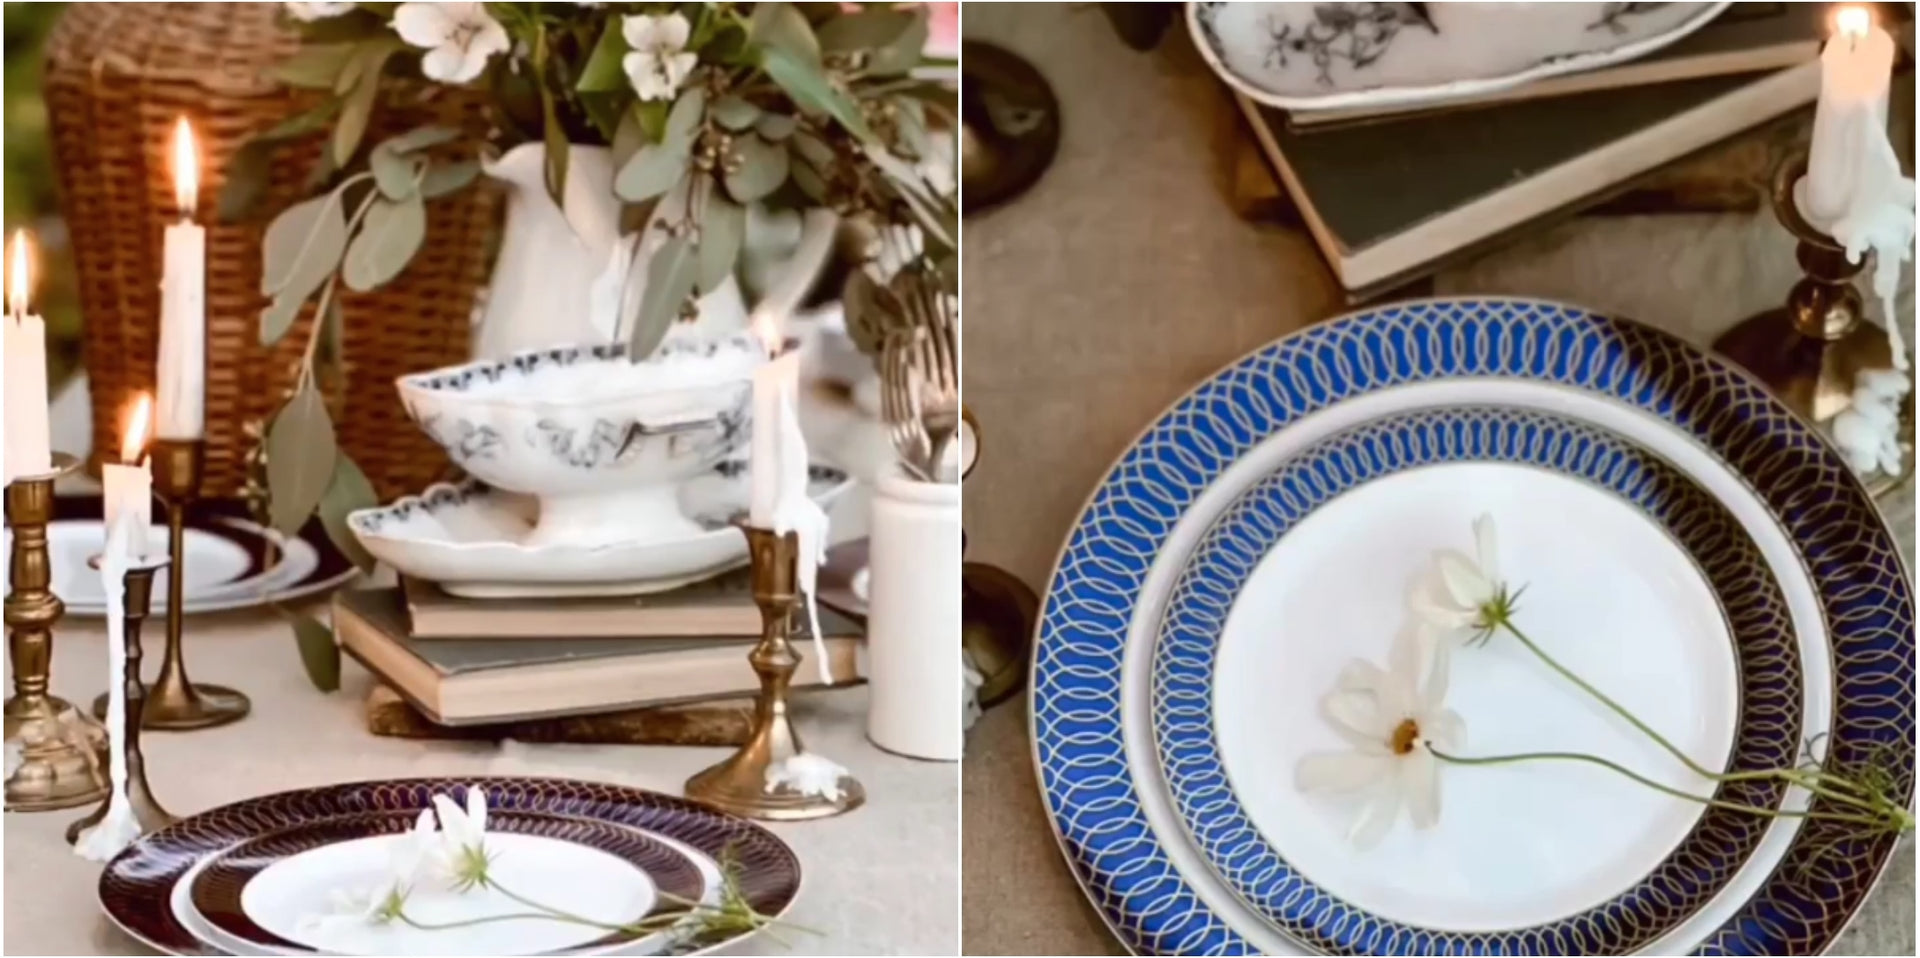 Vintage Romance: Designing an Elegant Outdoor Table Setup